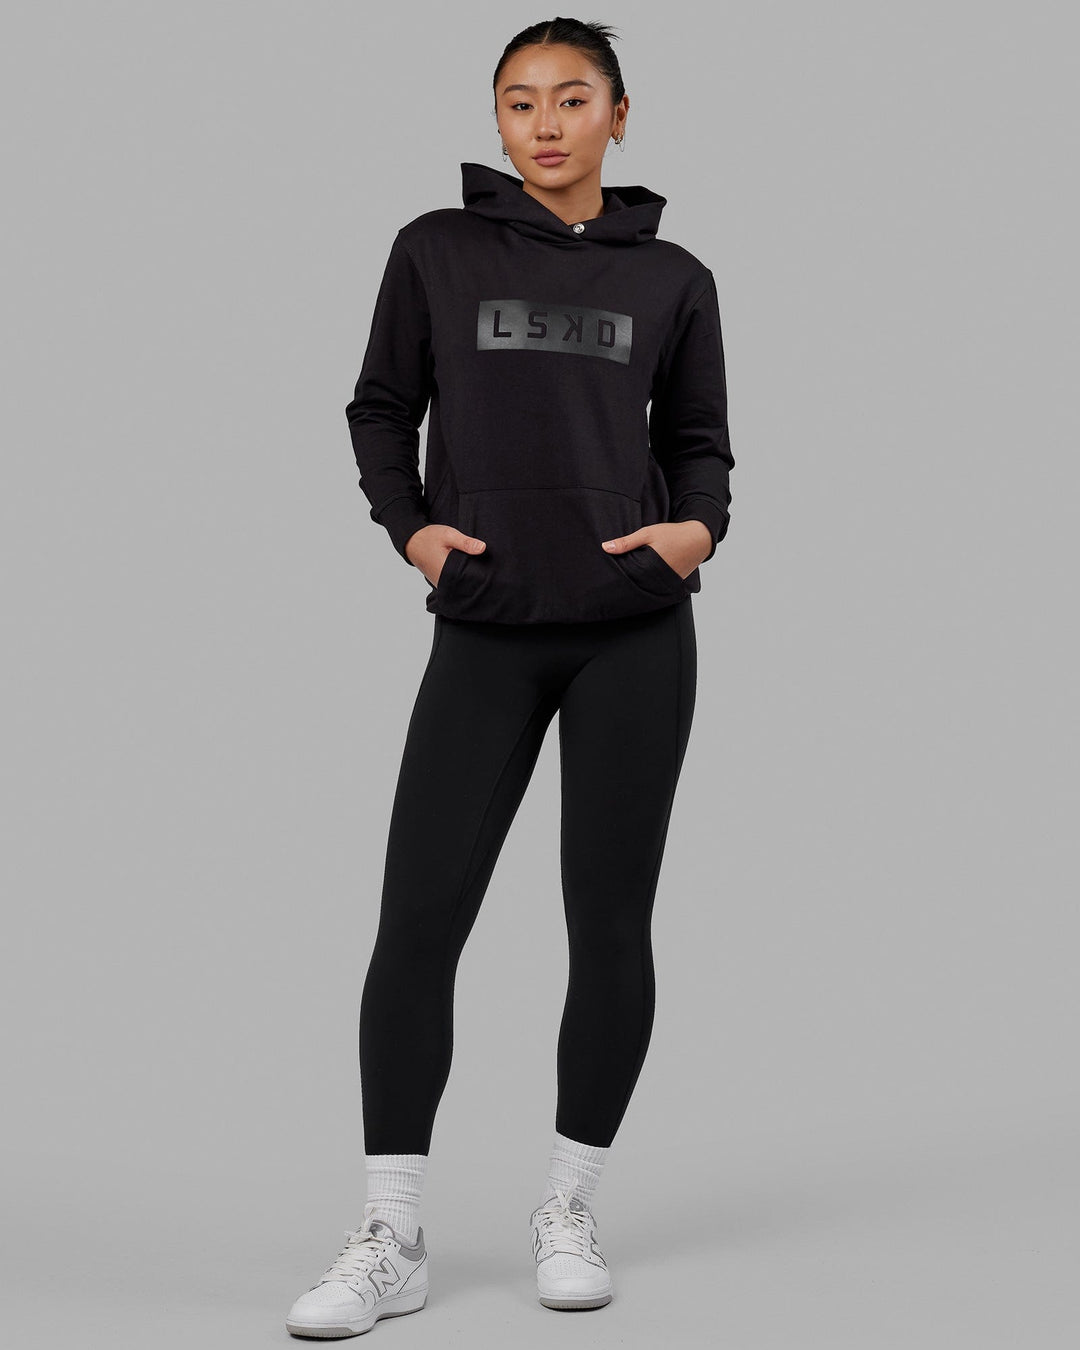 Woman wearing Unisex Strength FLXFLeece Hoodie - Black-Black